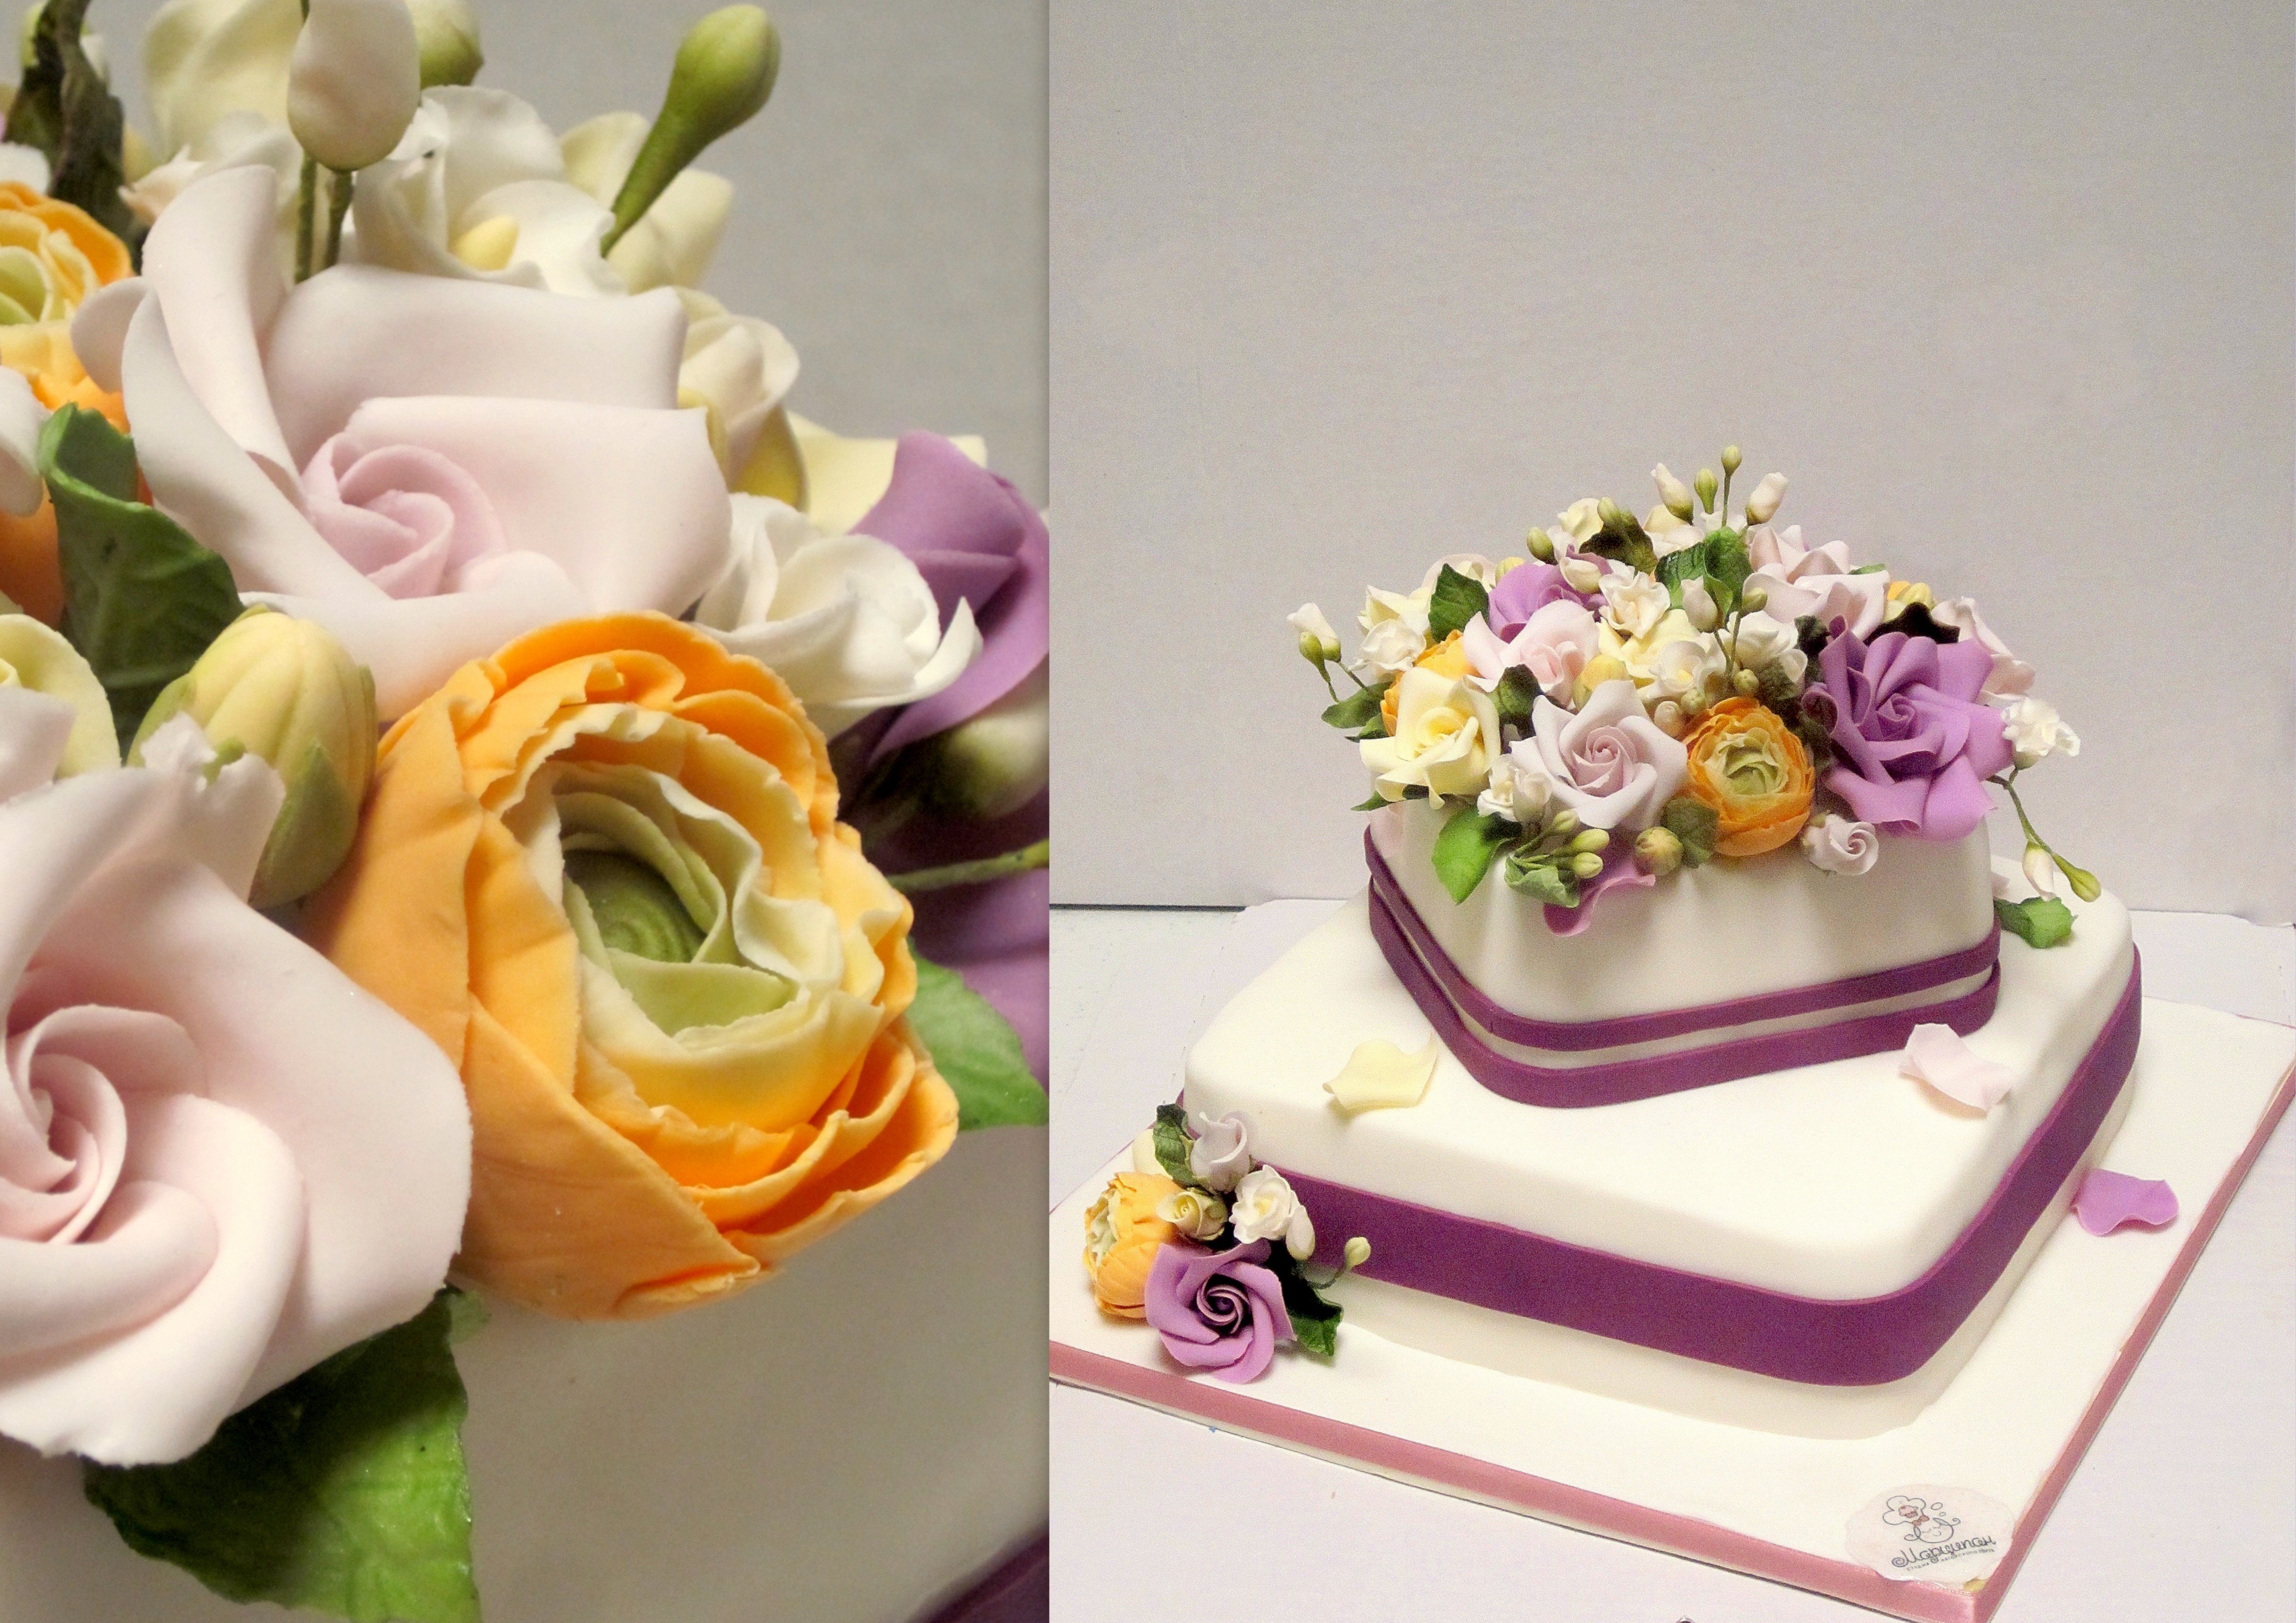 Цветы из марципана. Марципановый торт. Торт из марципана. Сделать цветы из марципана.